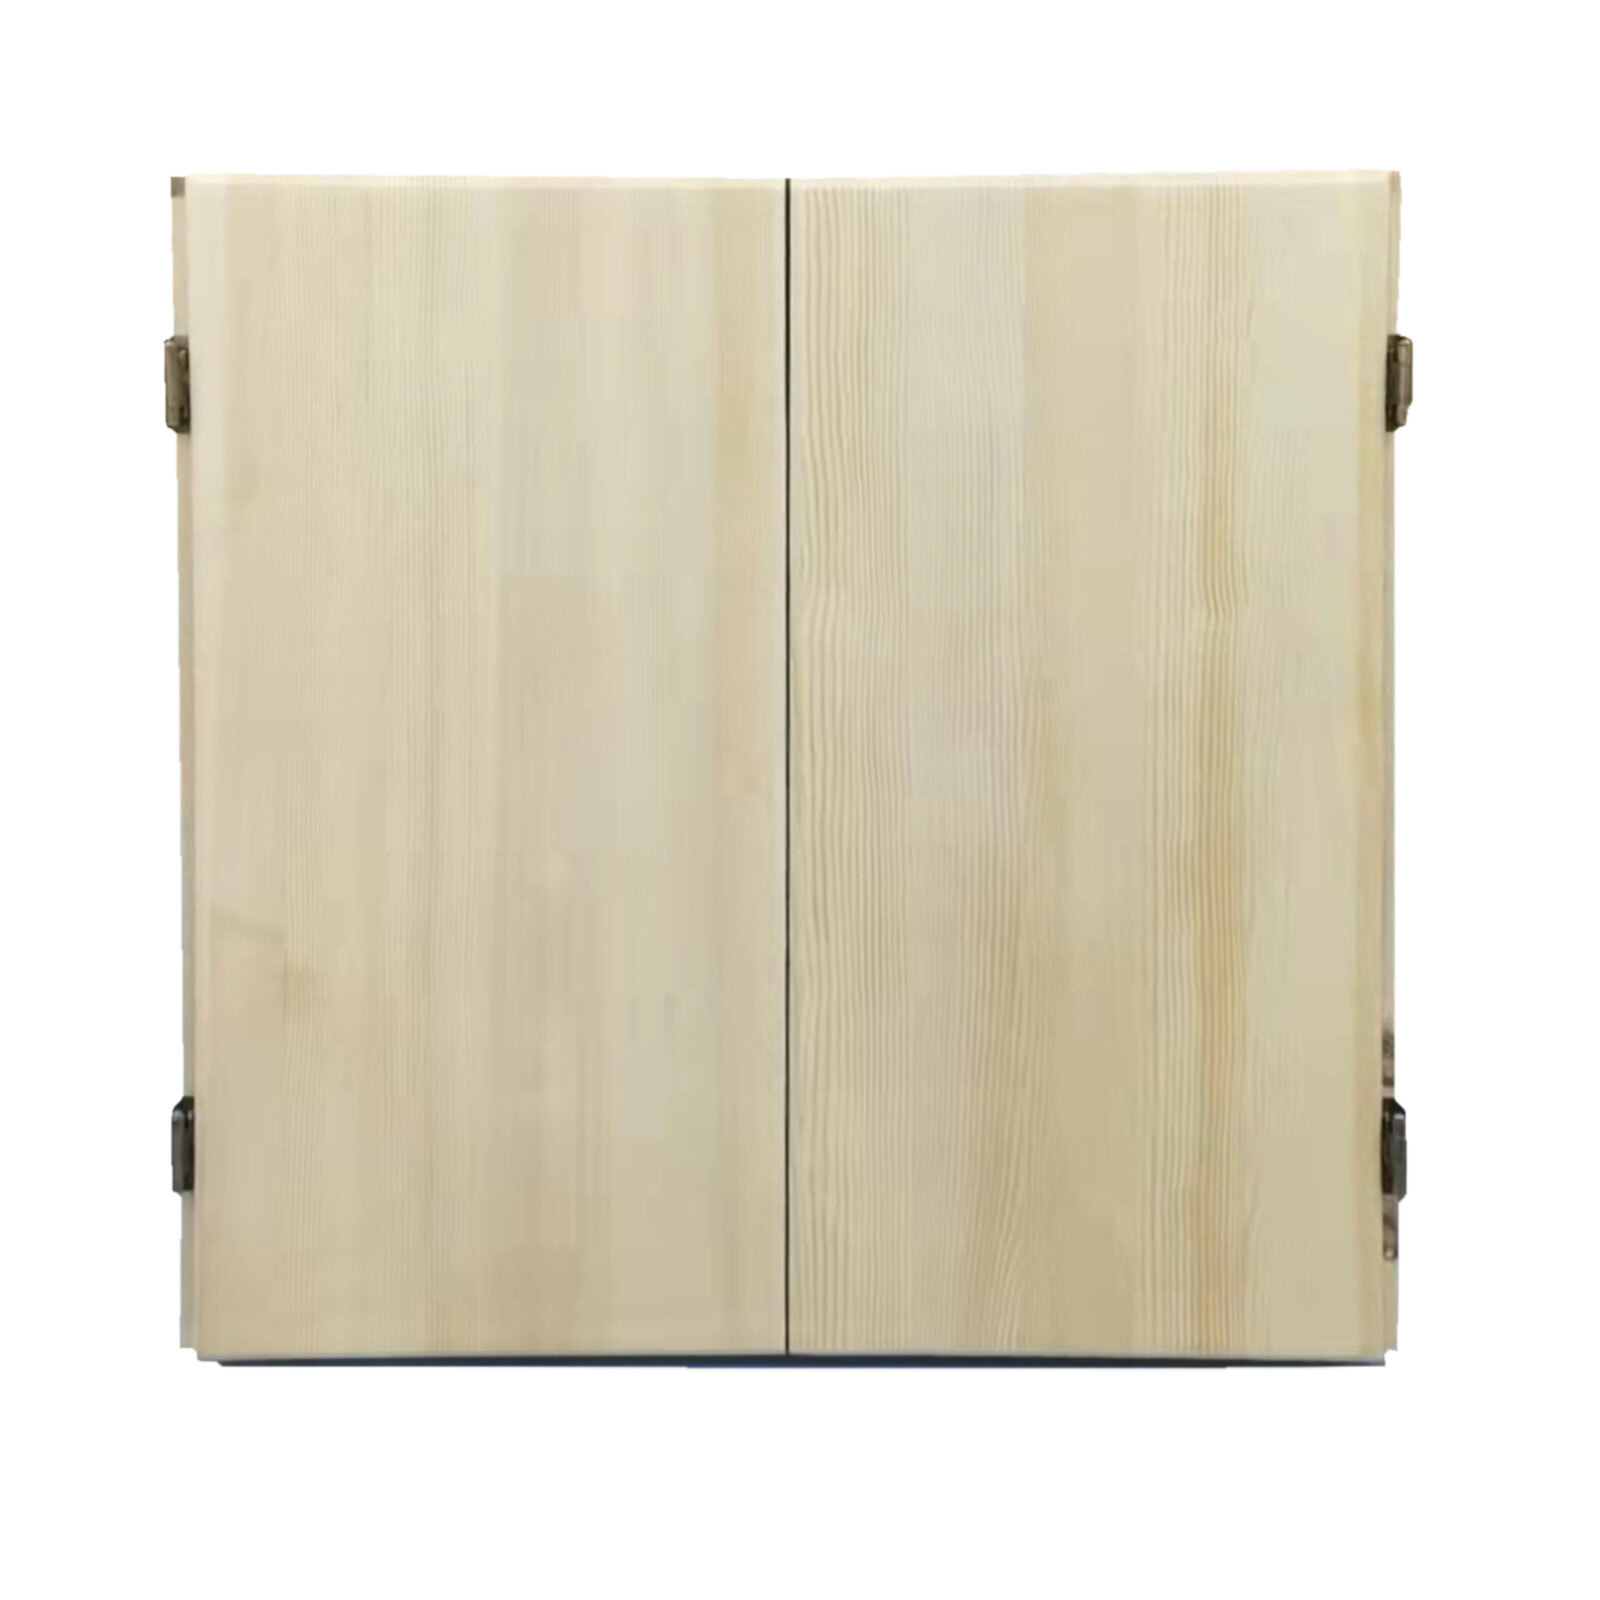 Club Wooden dart board cabinet